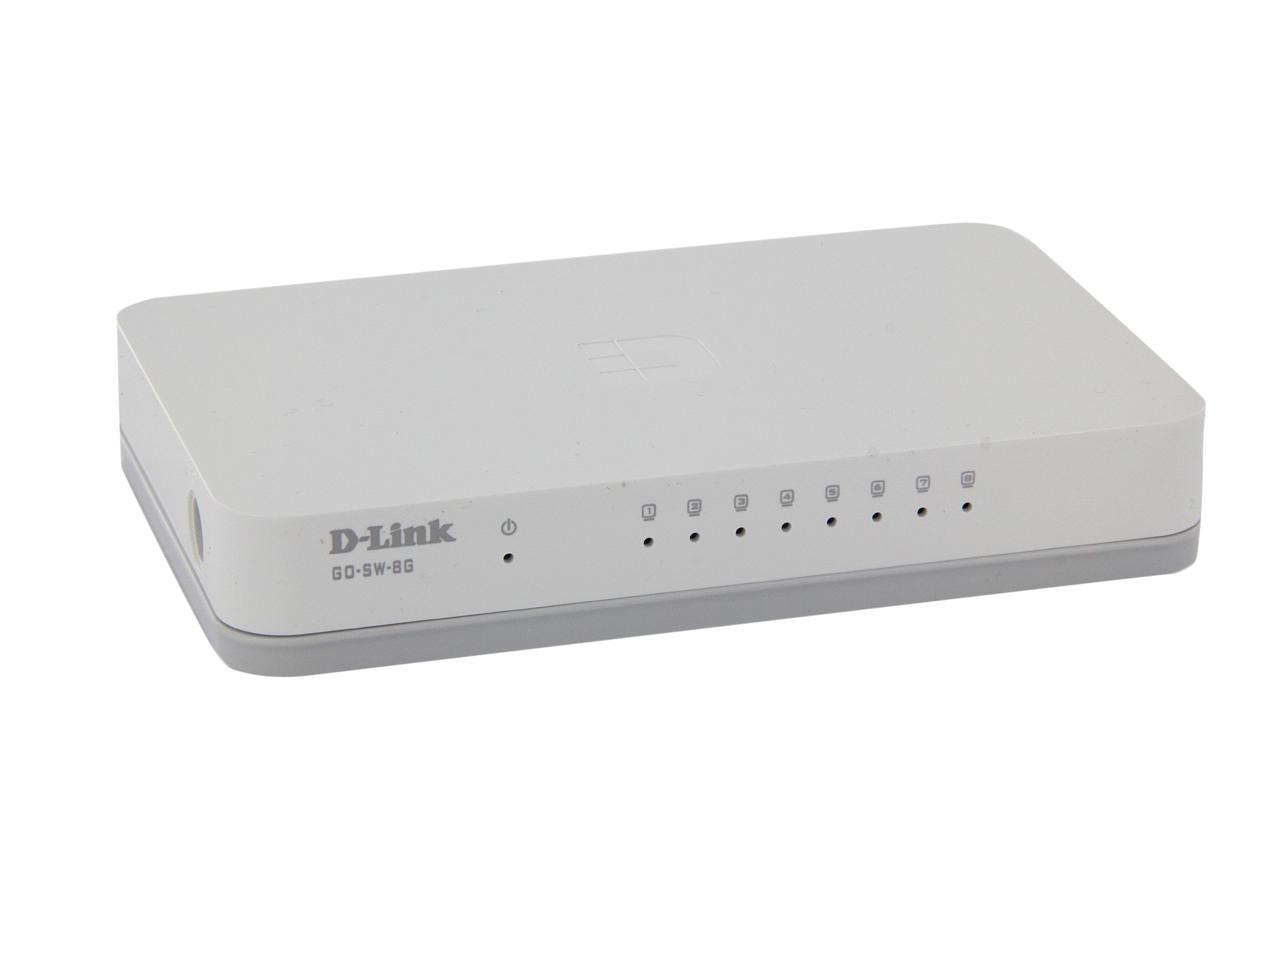 D-Link GO-SW-8G Gigabit Desktop Switch Networking Products Computers & Accessories agreena.com